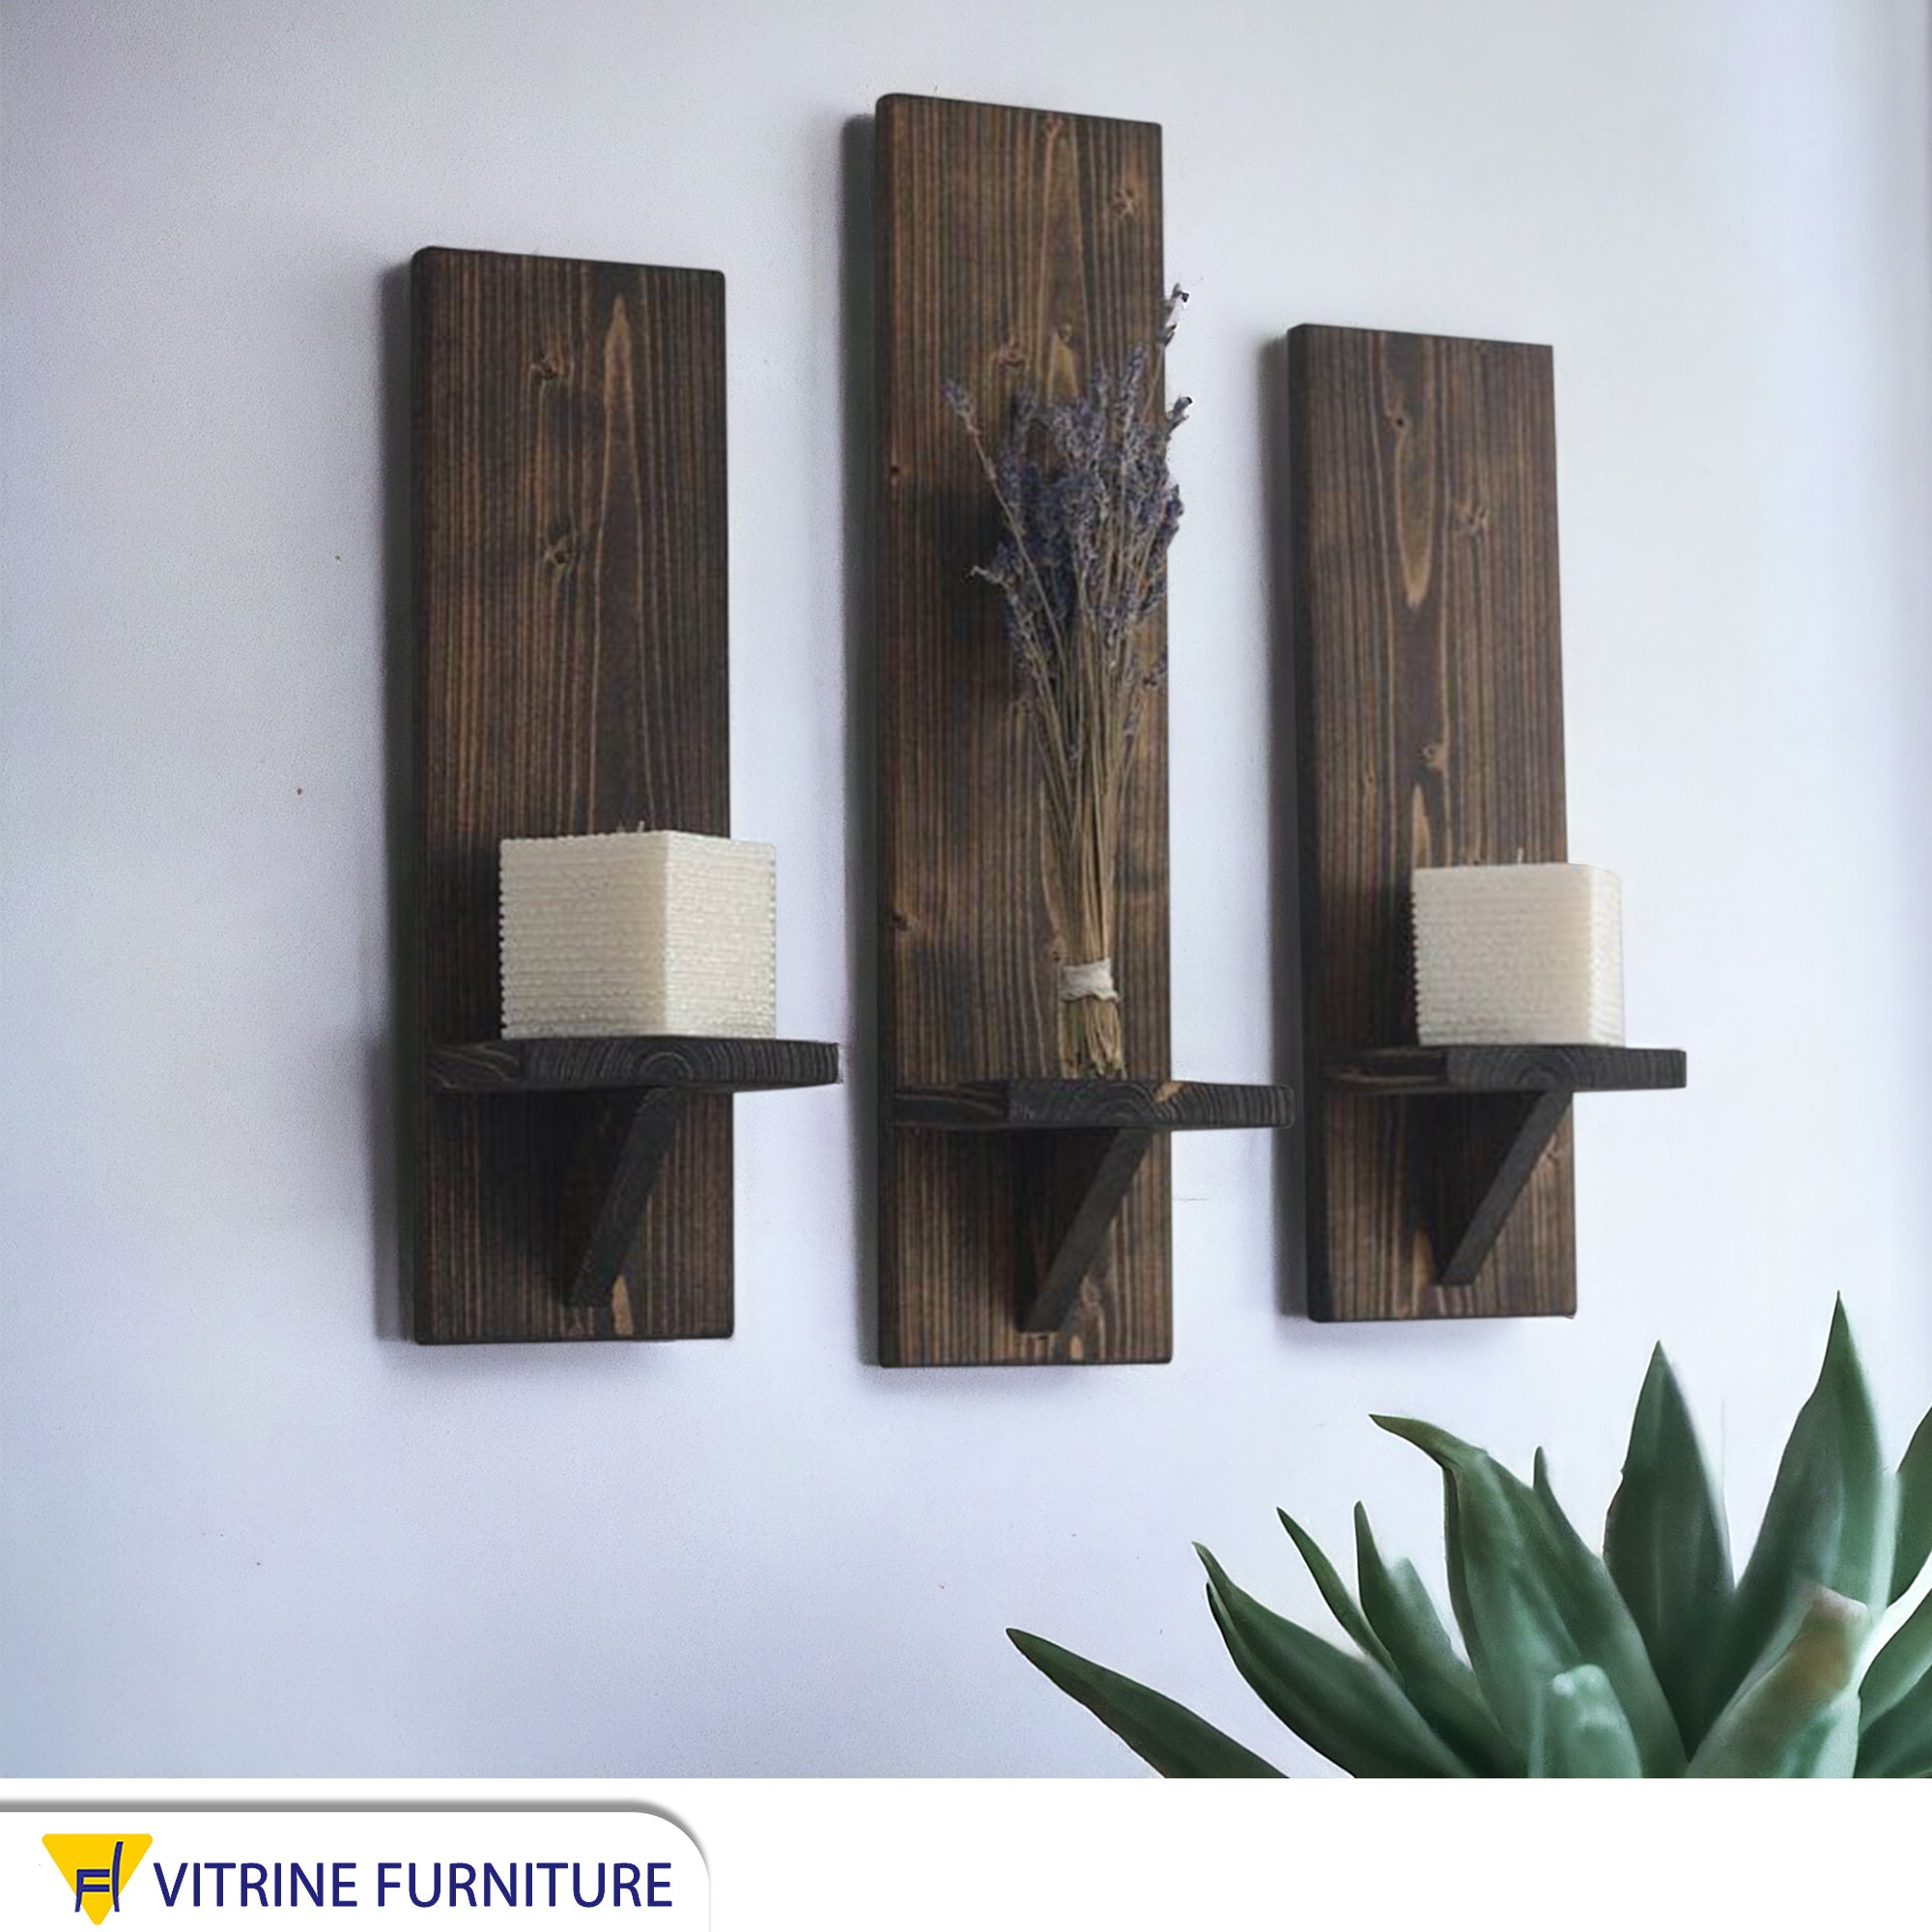 3 brown wooden wall shelves